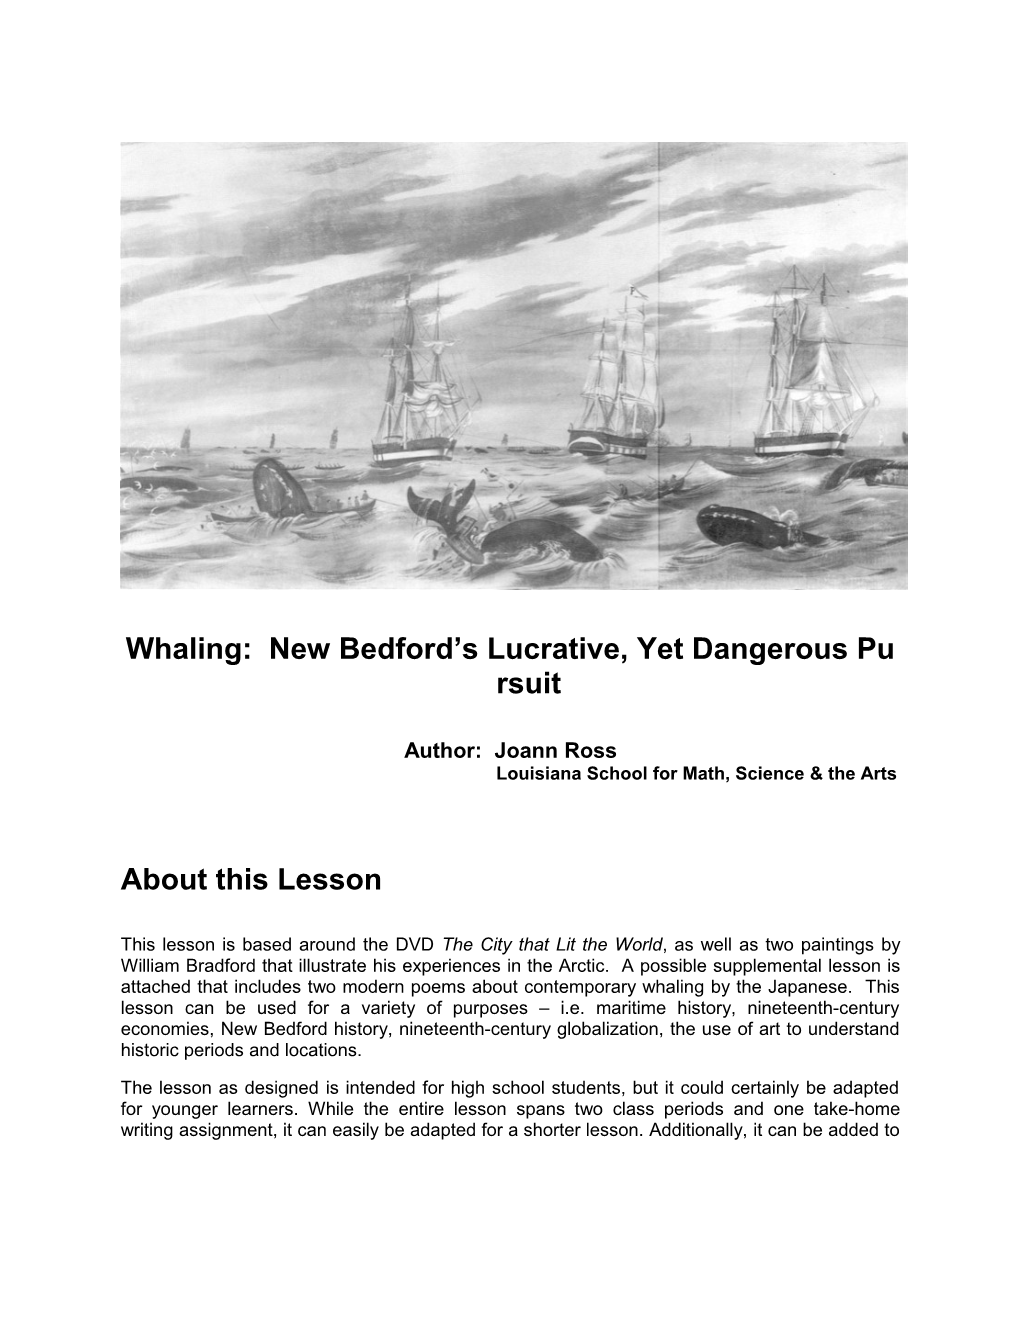 Whaling: New Bedford S Lucrative, Yet Dangerous Pursuit